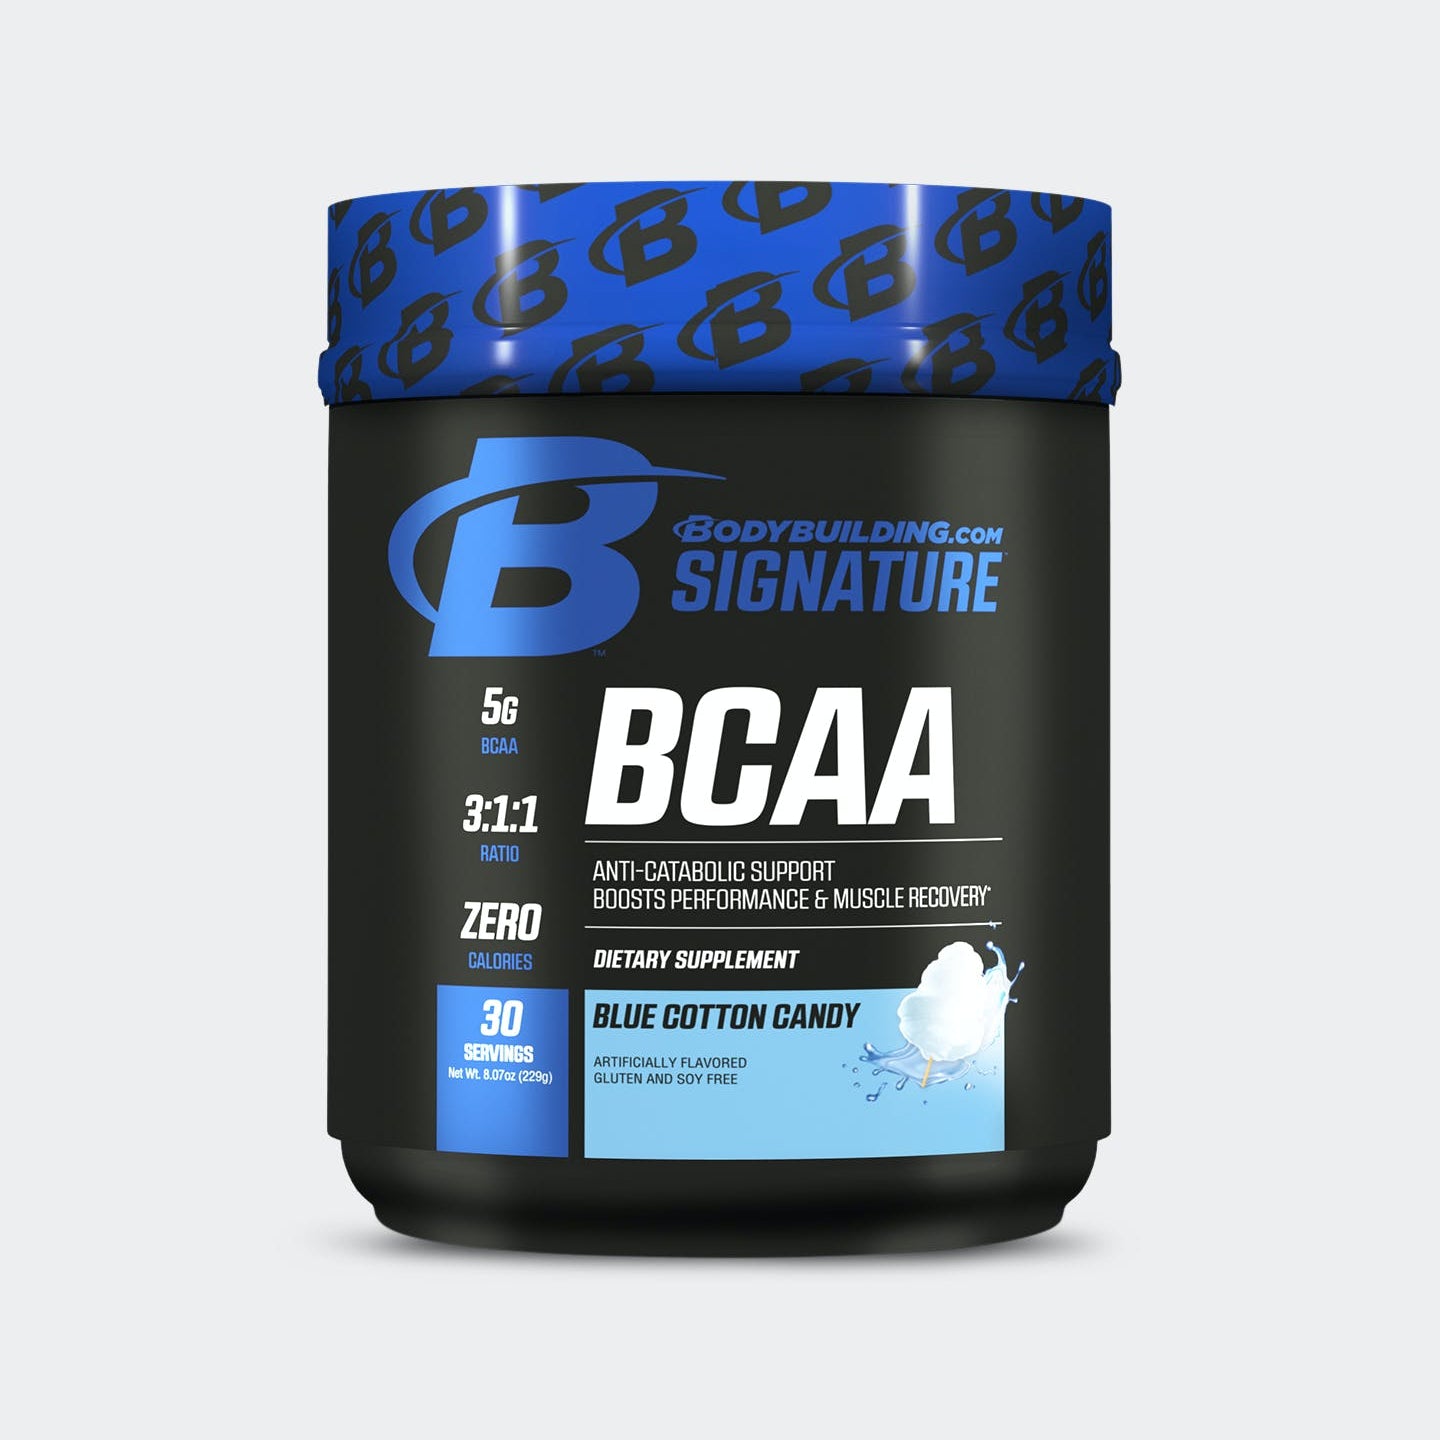 Bodybuilding.com Signature Signature BCAA, Blue Cotton Candy, 30 Servings